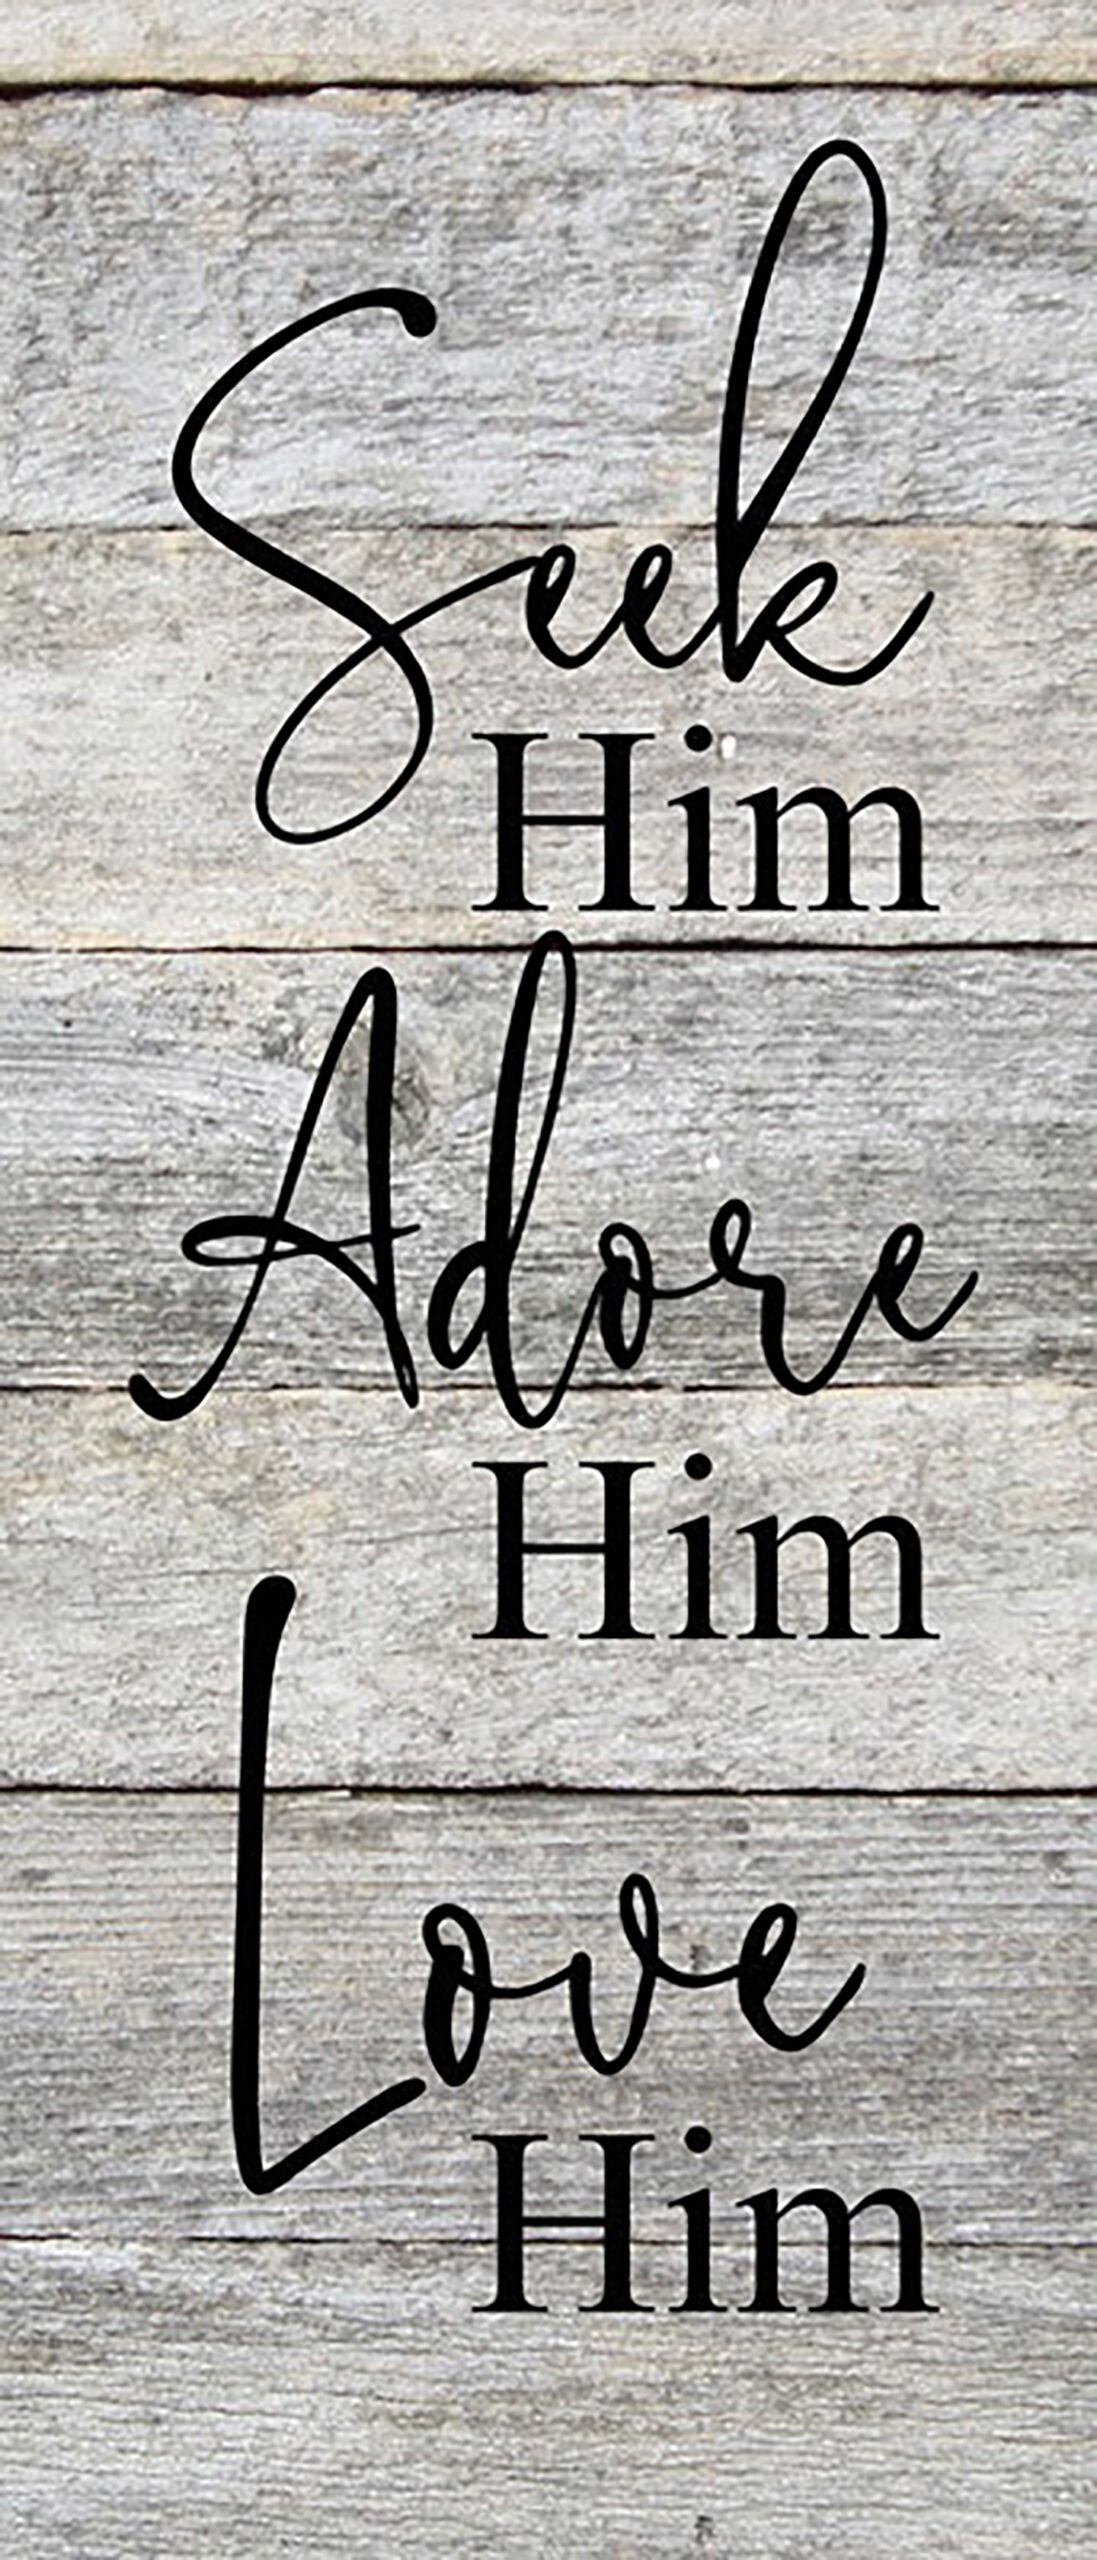 Seek Him. Adore Him. Love Him. / 6"x14" Reclaimed Wood Sign